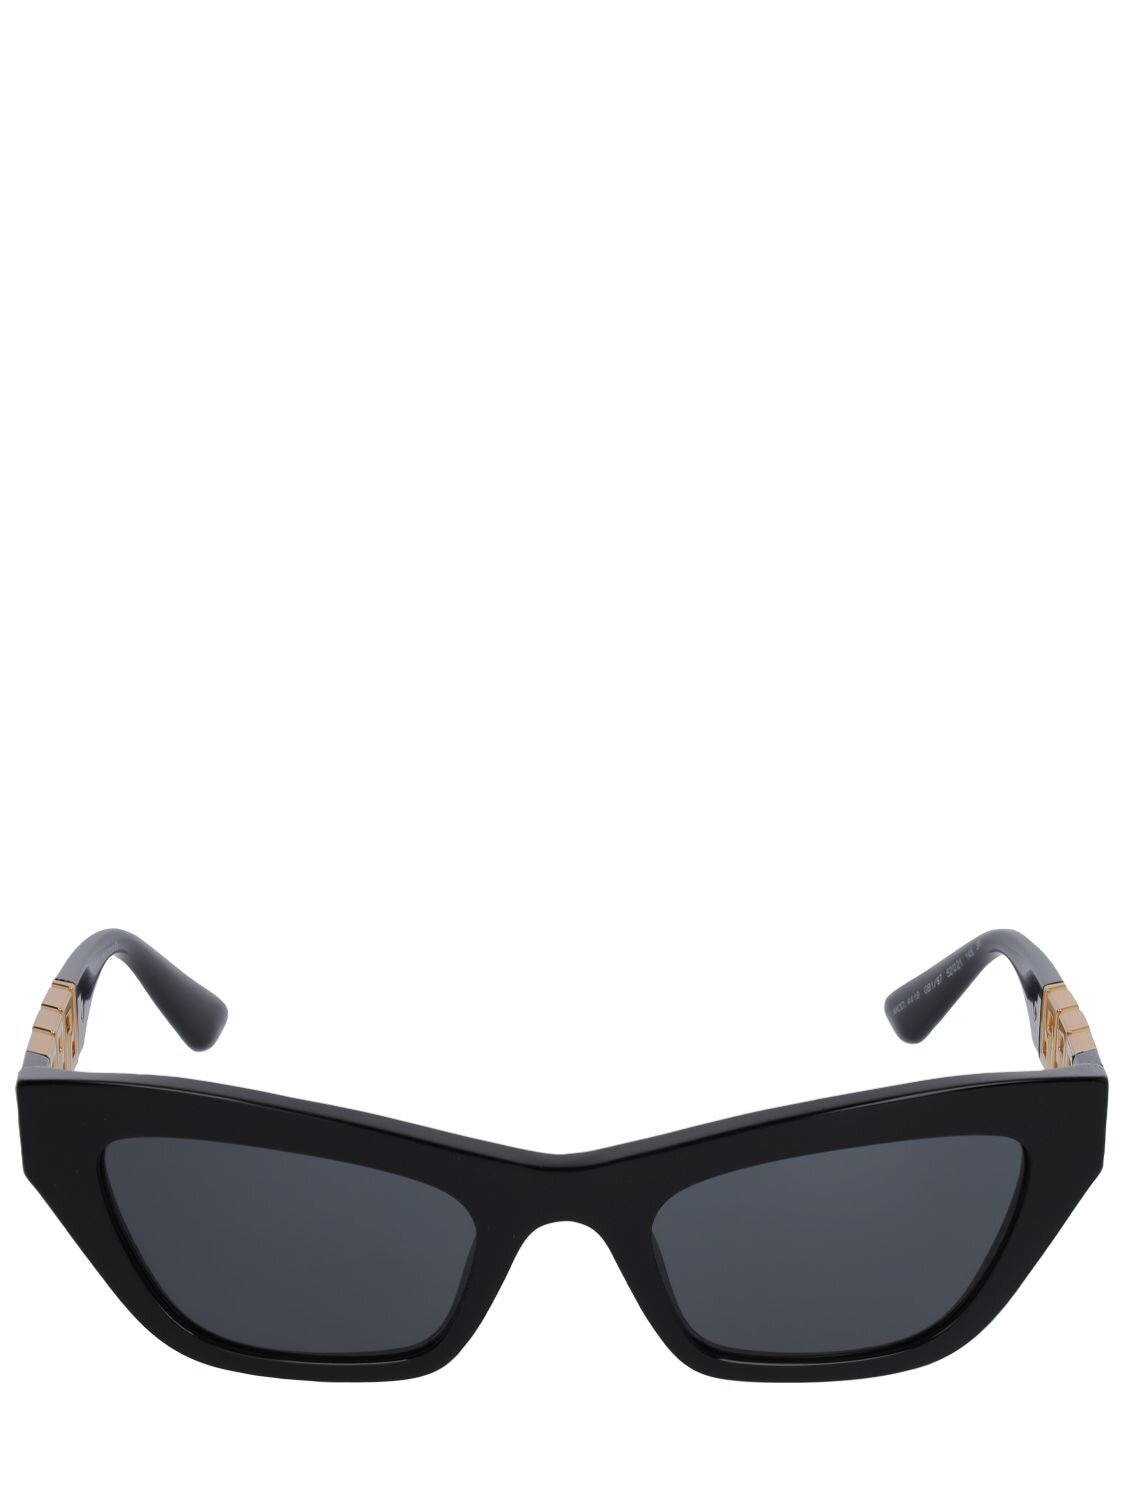 VERSACE Greek Motif Cat-eye Sunglasses in black / grey